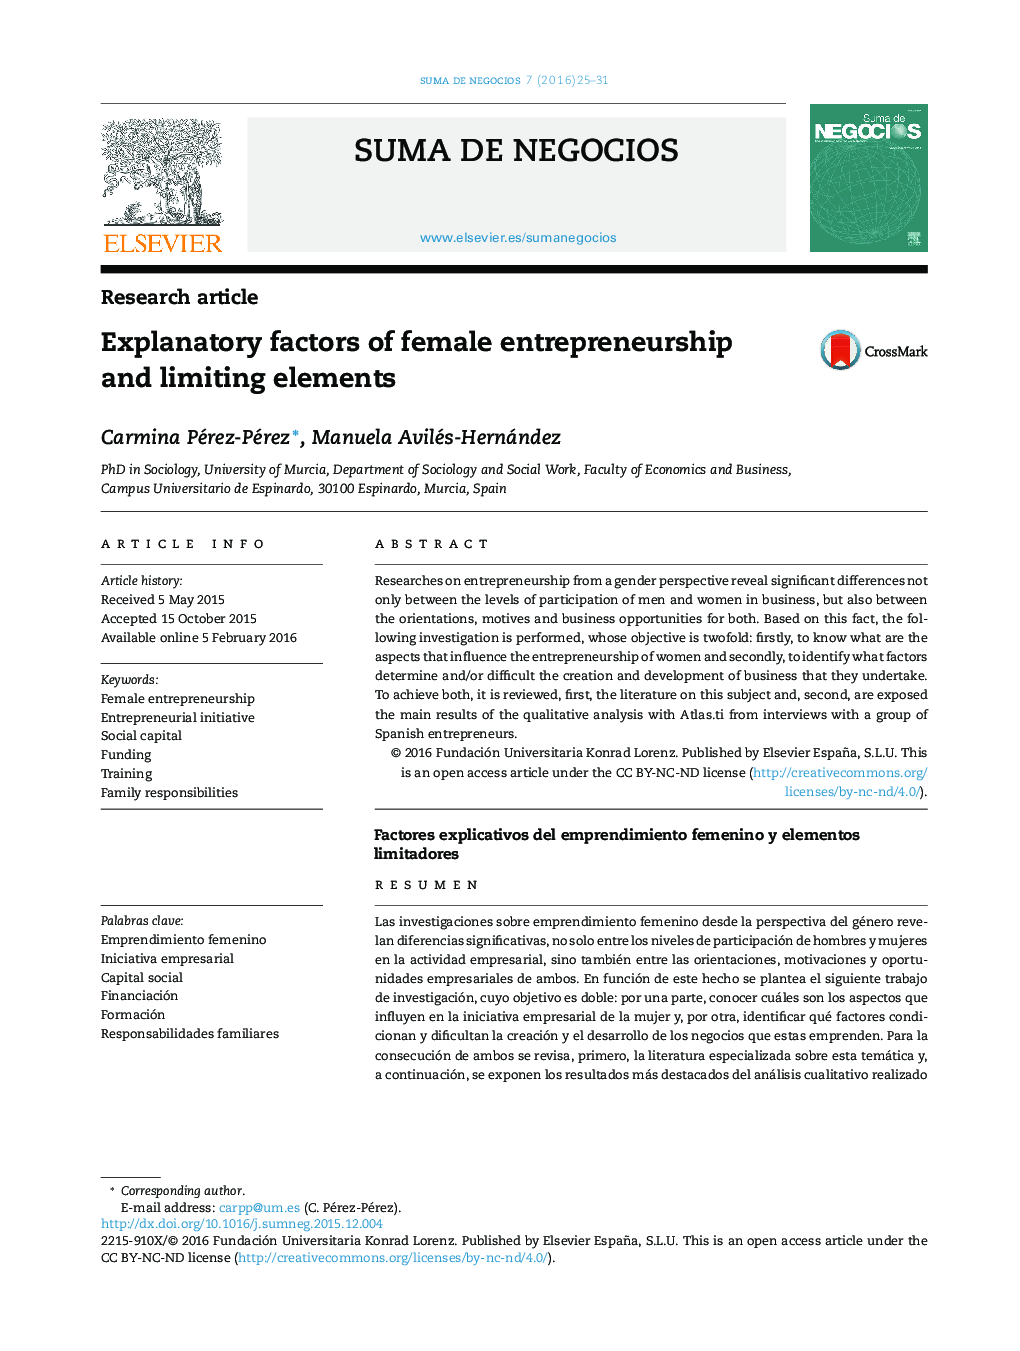 Explanatory factors of female entrepreneurship and limiting elements